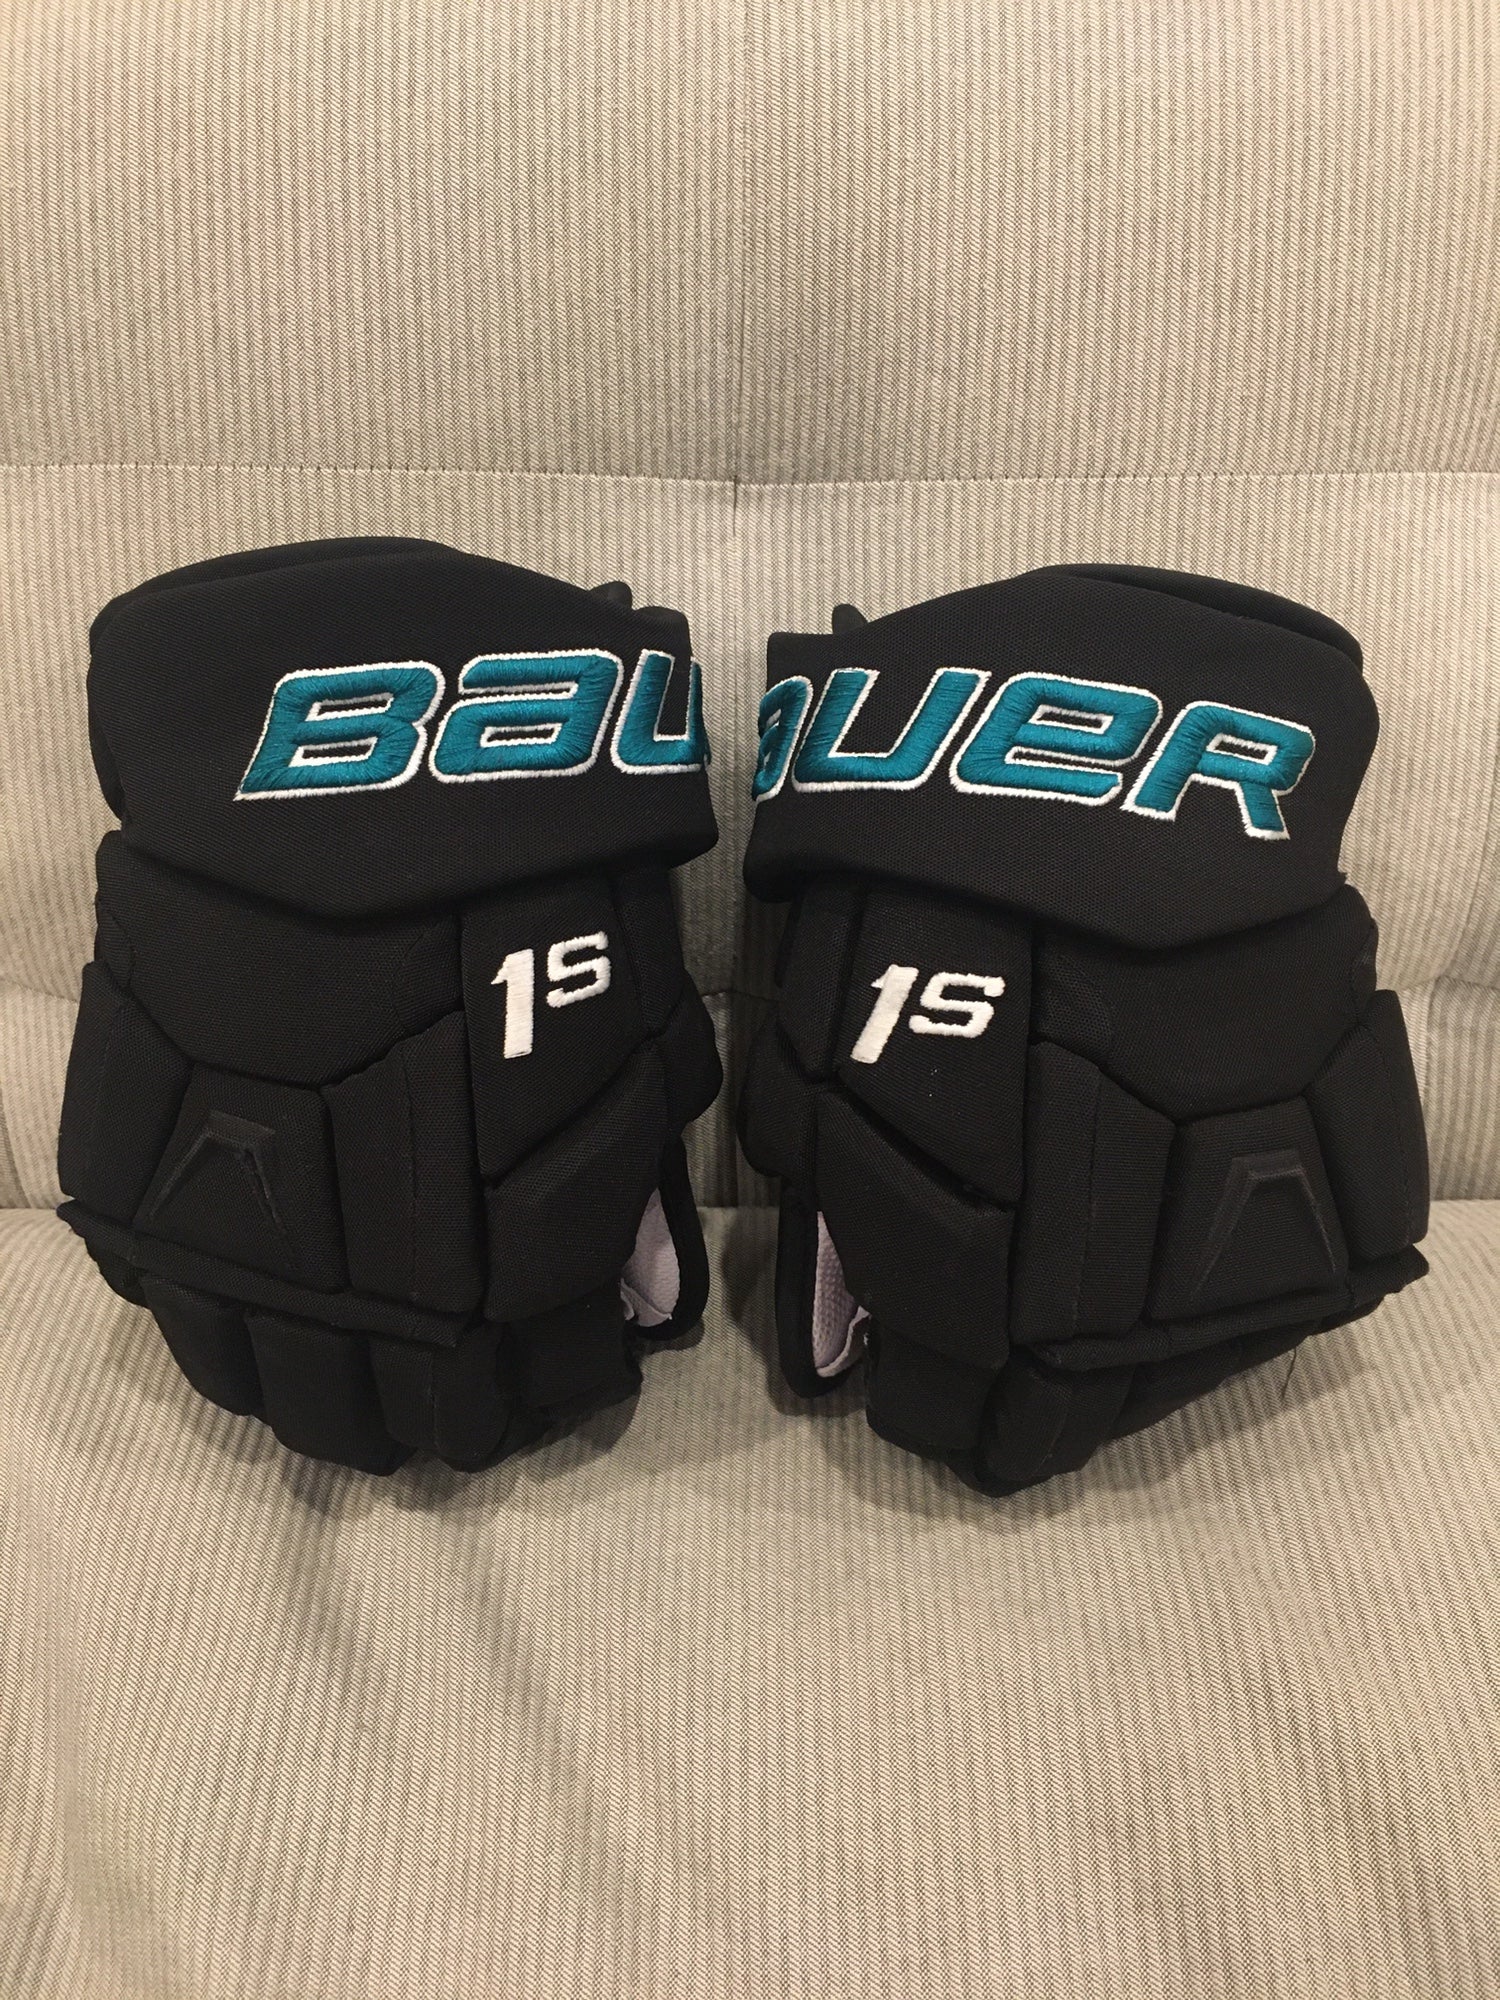 Brand new Bauer skates and warrior gloves and one piece stick., Hockey, St. Albert